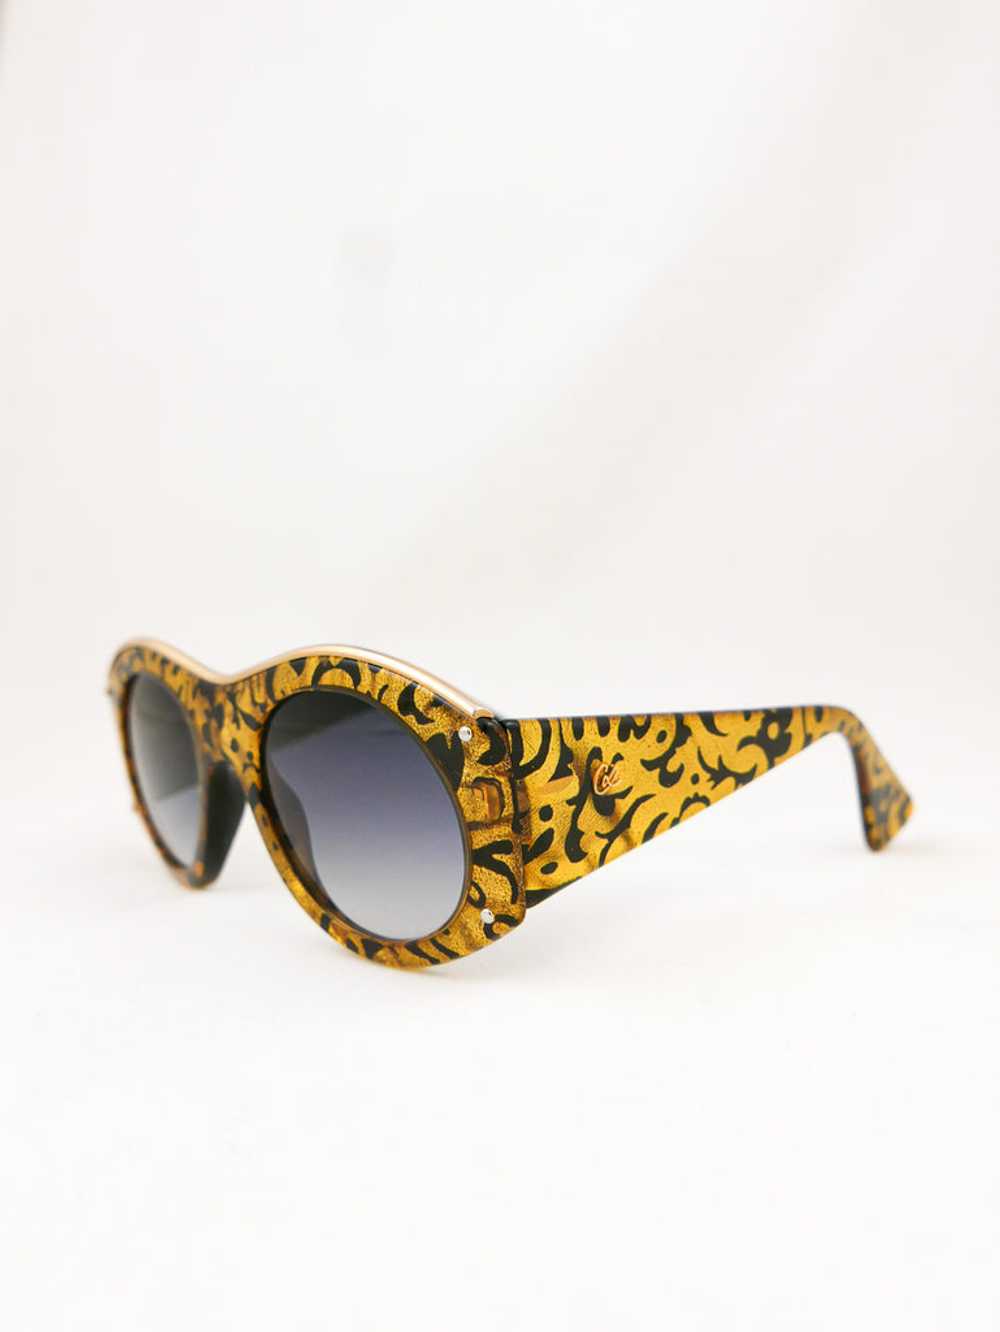 Christian Lacroix Sunglasses - image 4